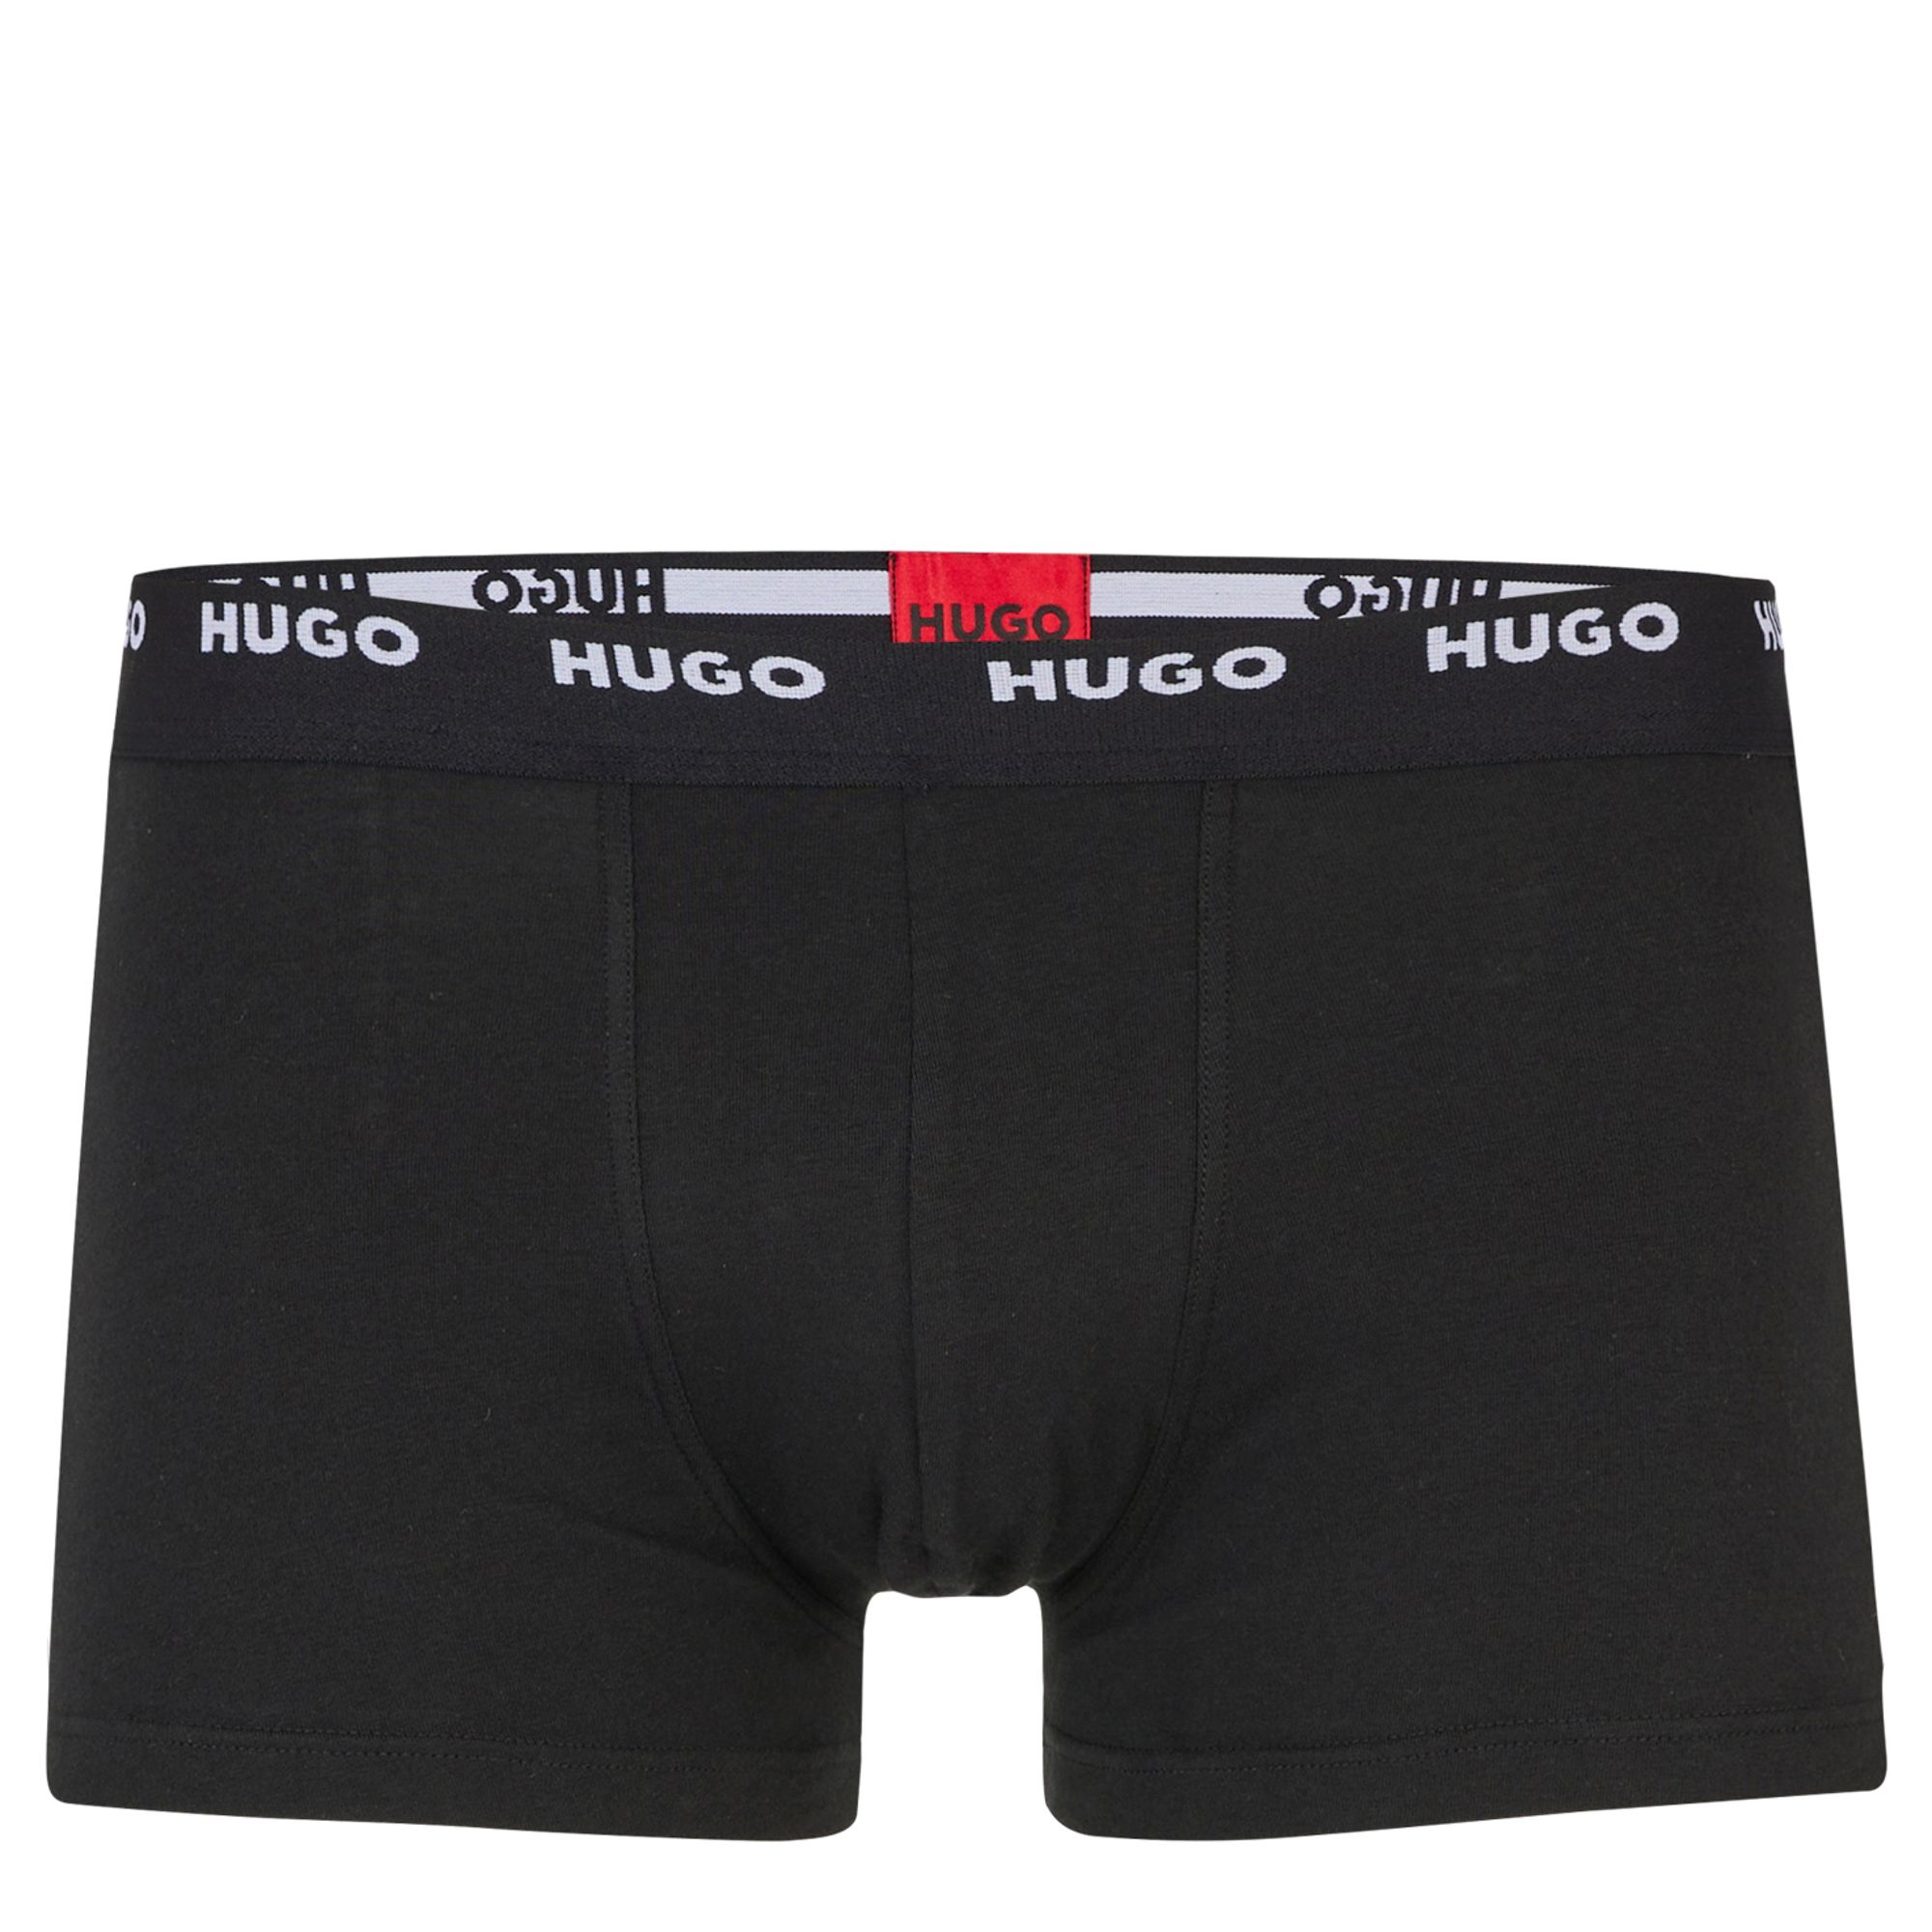 Hugo Boss Menswear Boxershort Zwart 082271-001-L